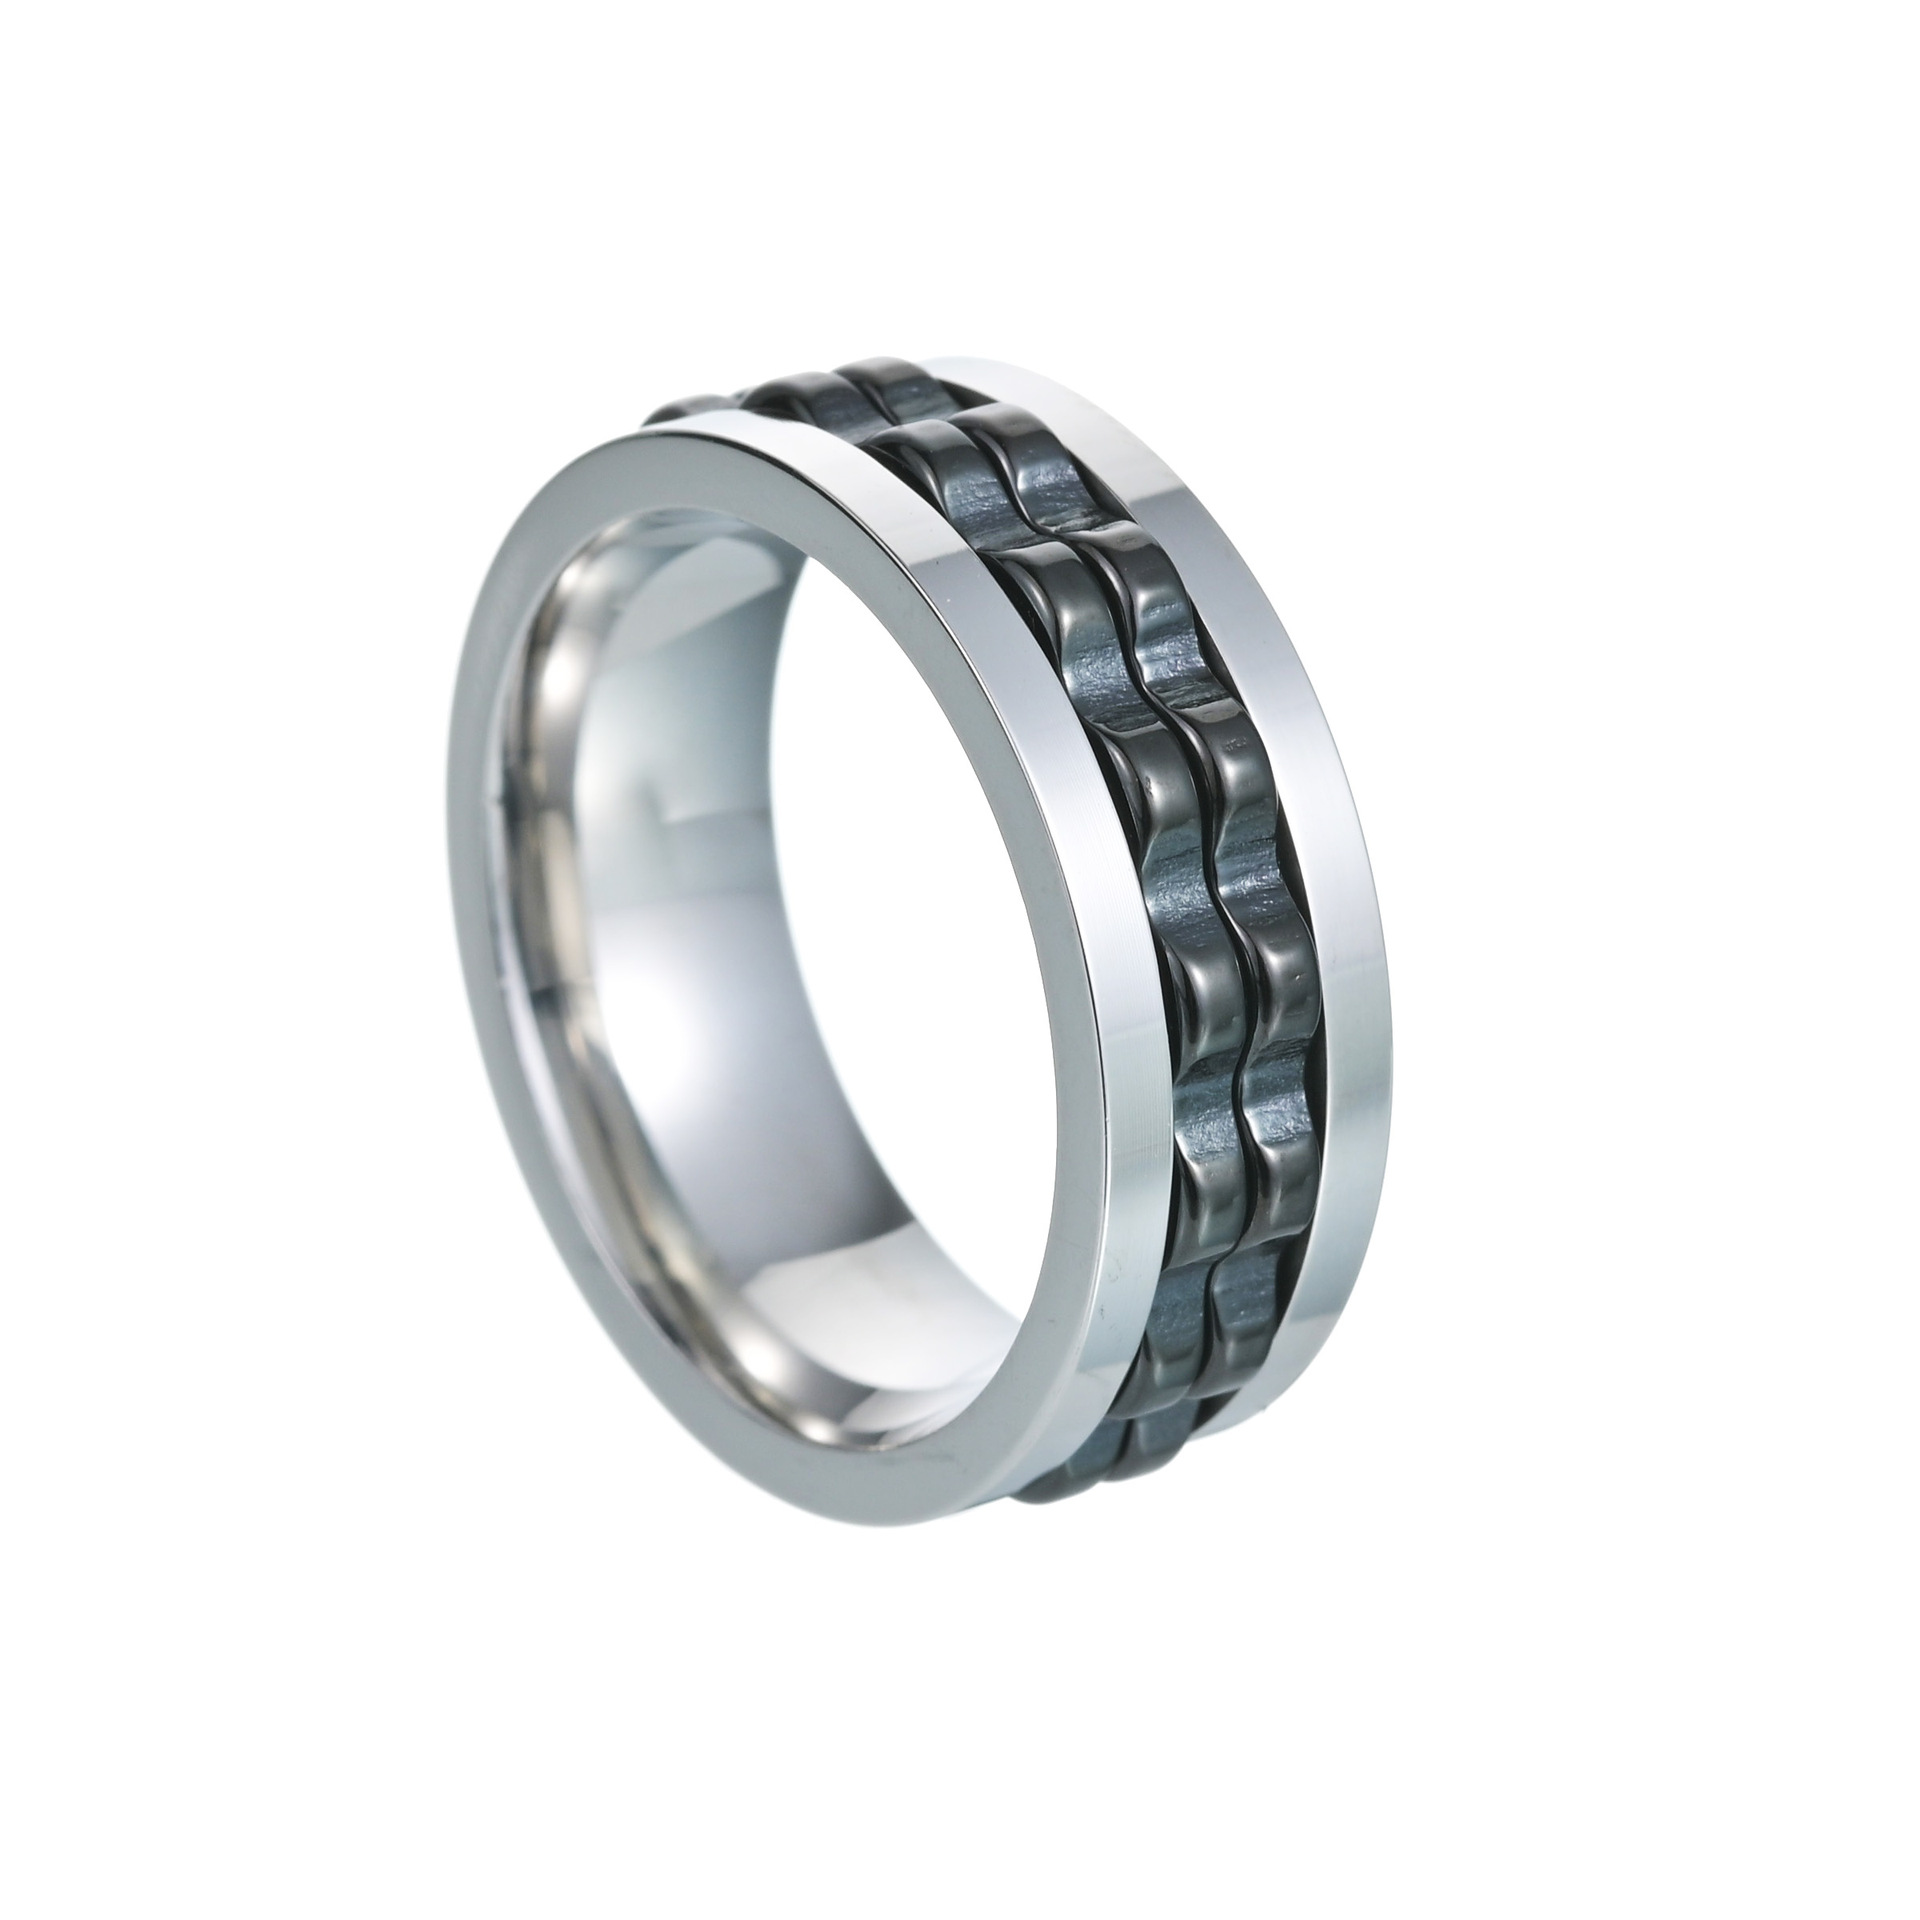 2:Silver ring   black gear